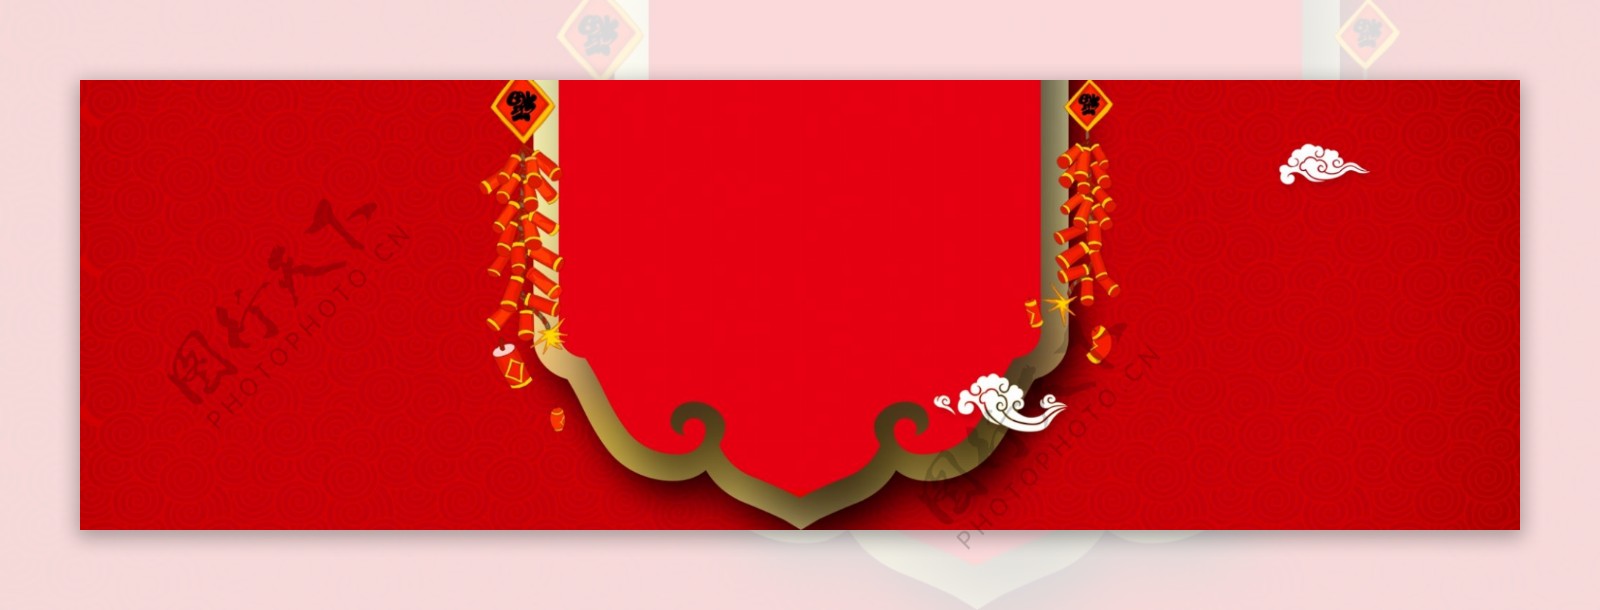 大红灯笼新年中国年banner背景